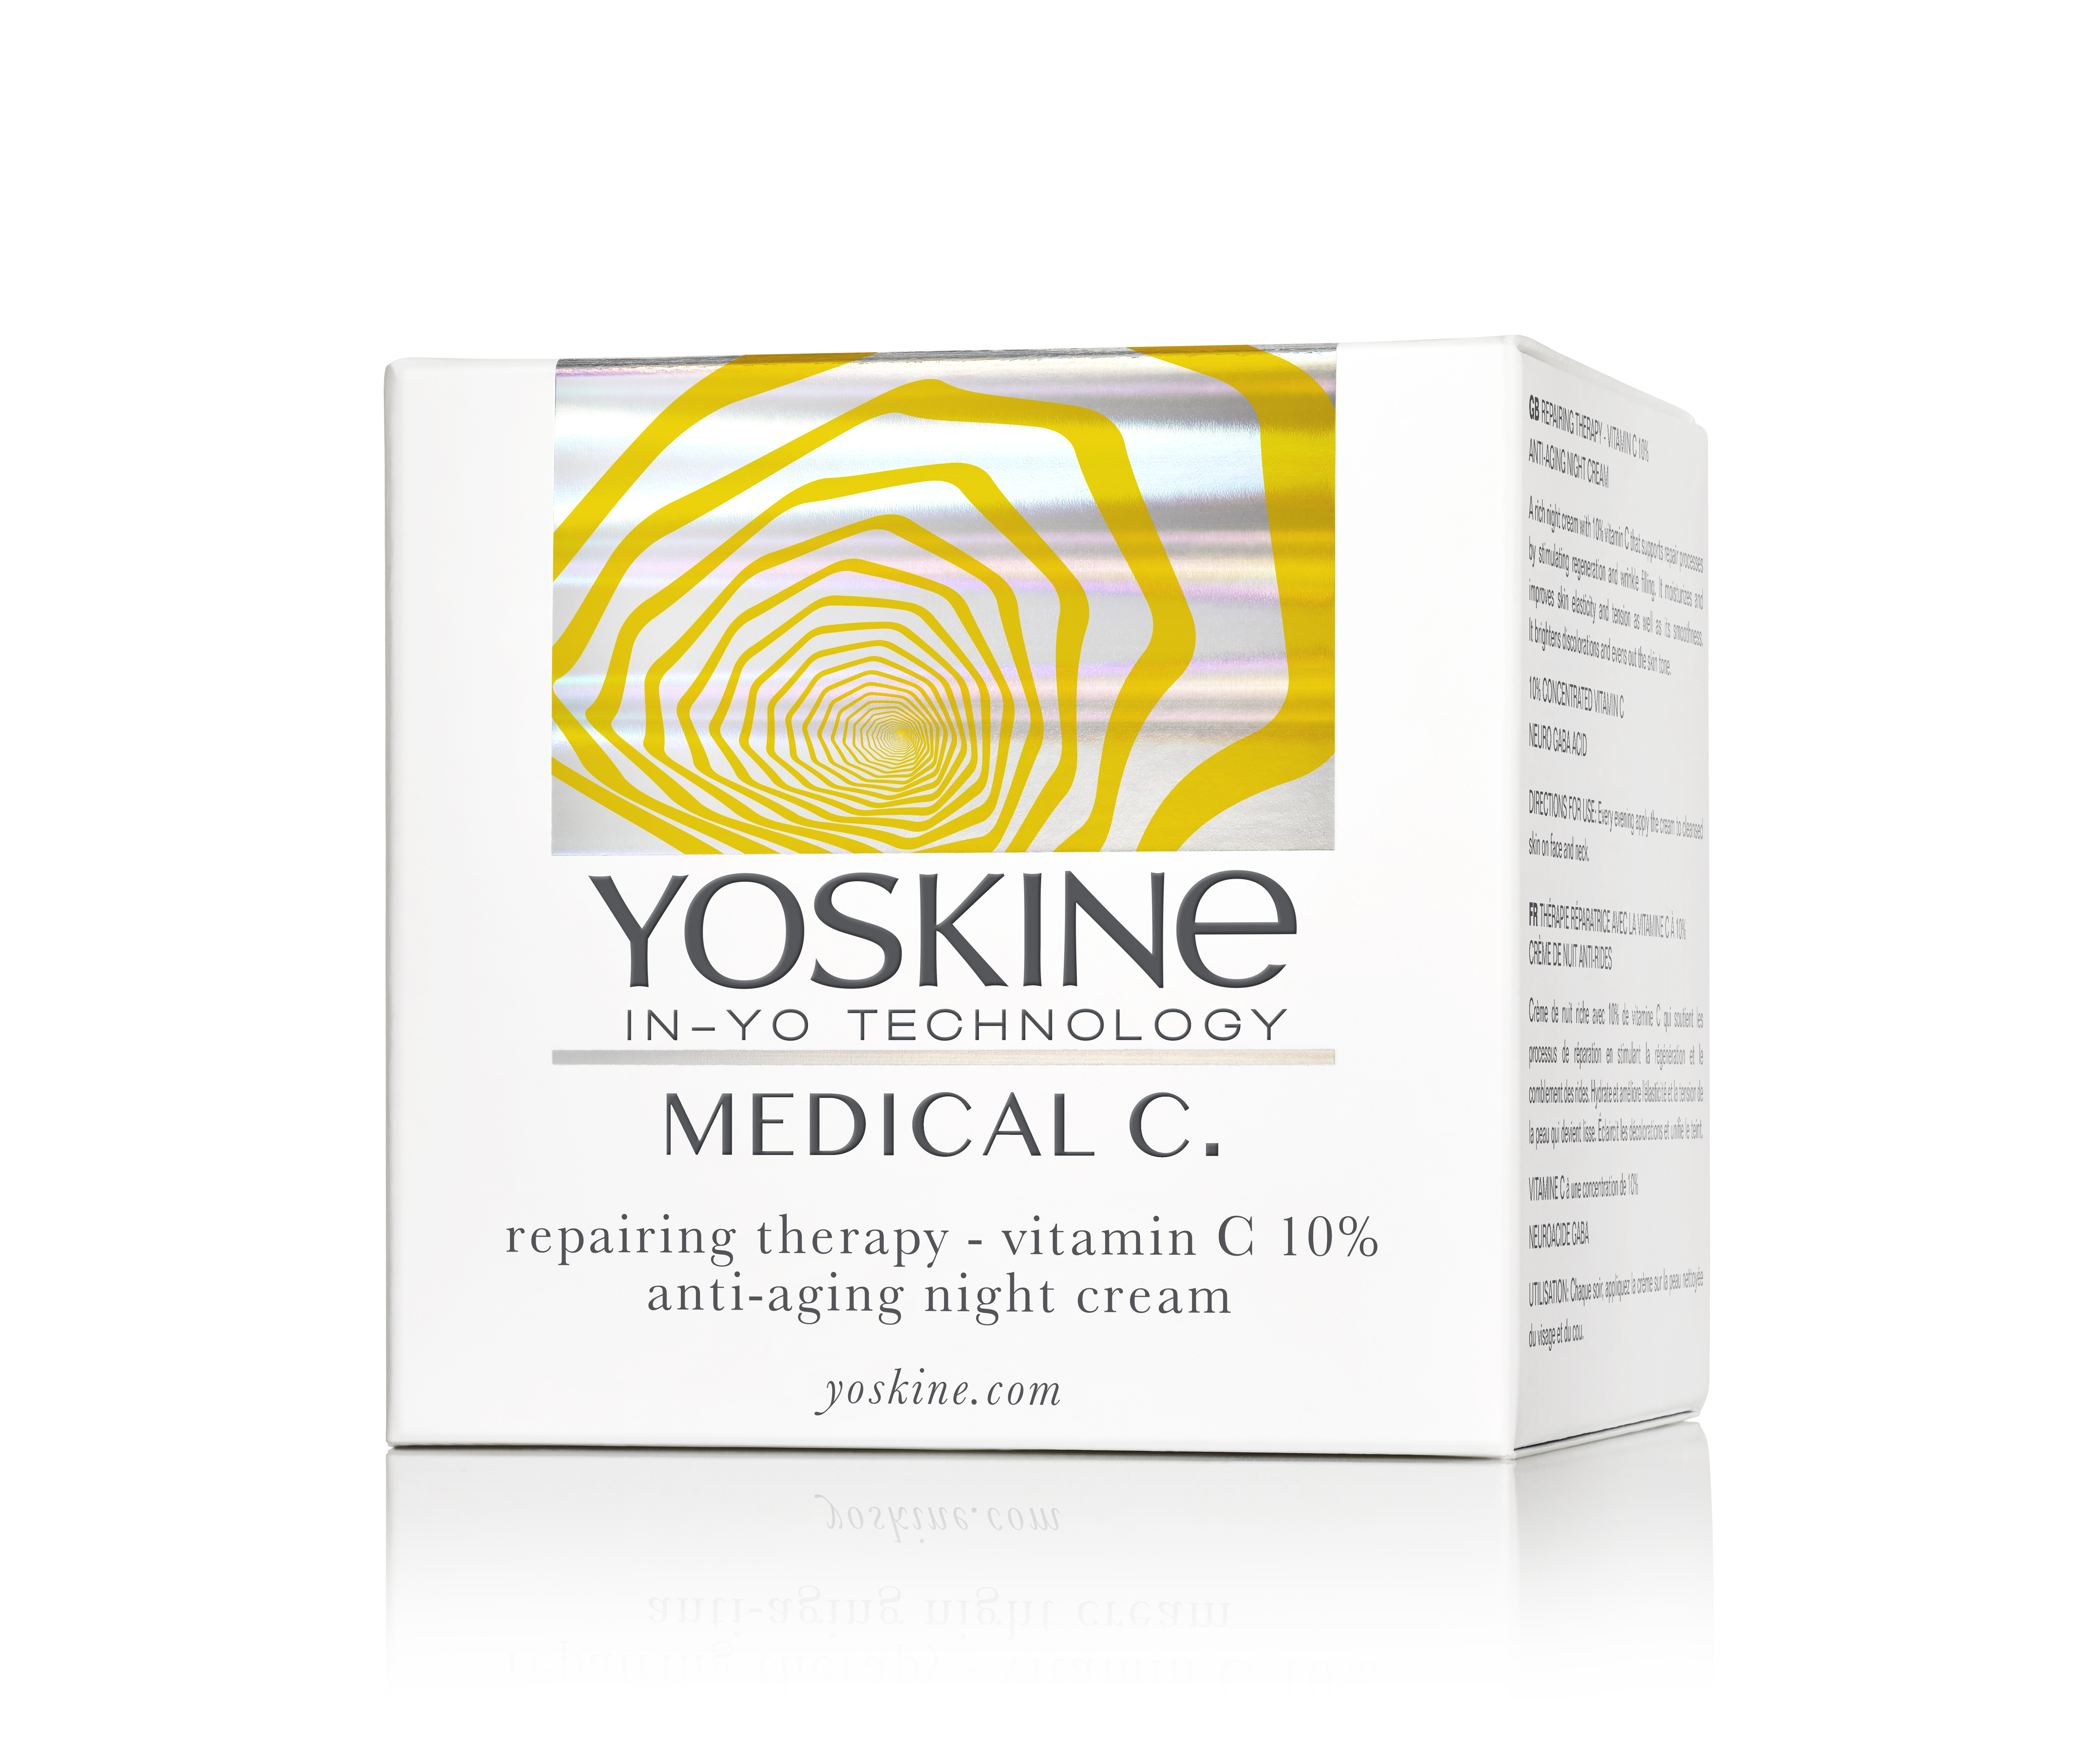 YOSKINE MEDICAL C. Repairing therapy - Vitamin C 10% anti-aging night cream